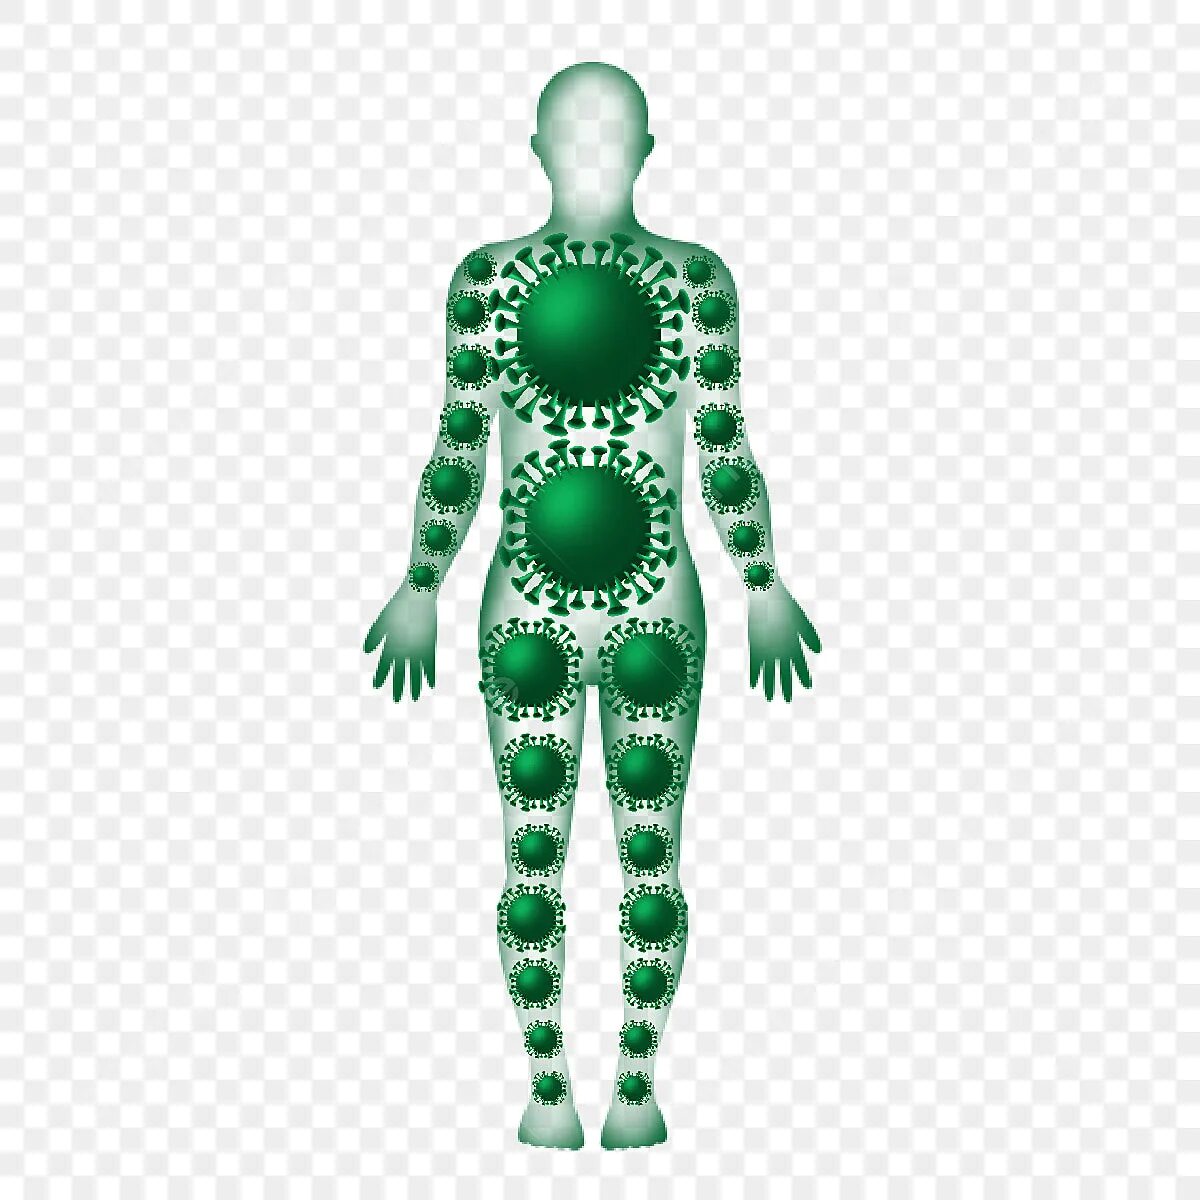 Green Human body. Richard Green virus. Ткани организма PNG. Richard virus